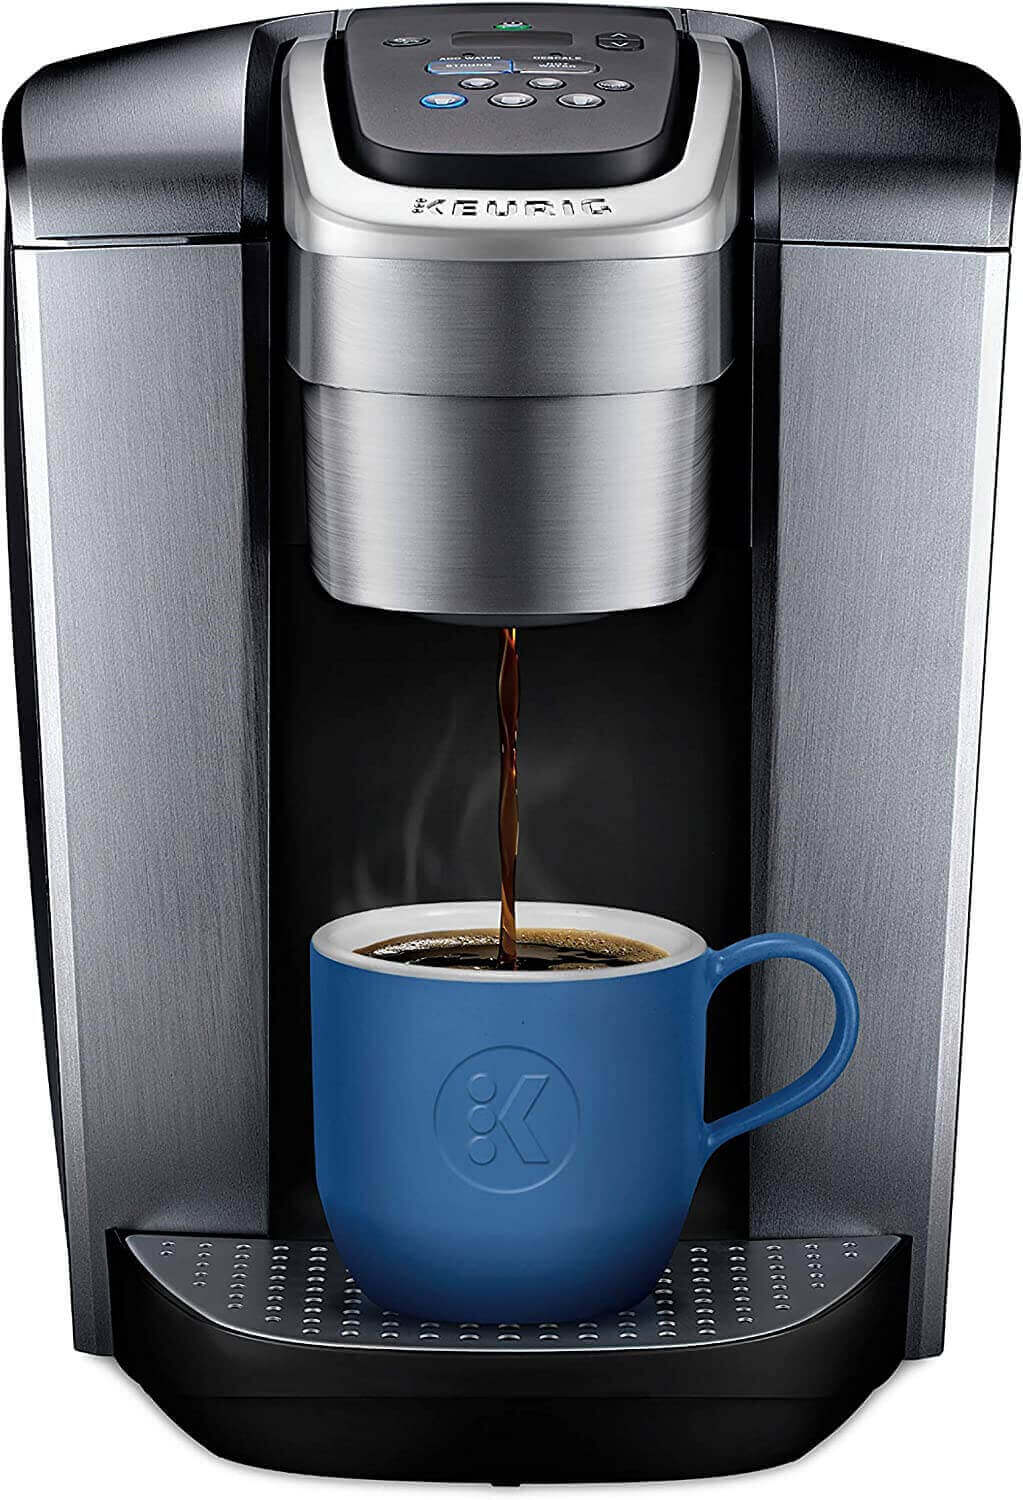 Keurig K-Elite Coffee Maker - The best Overall